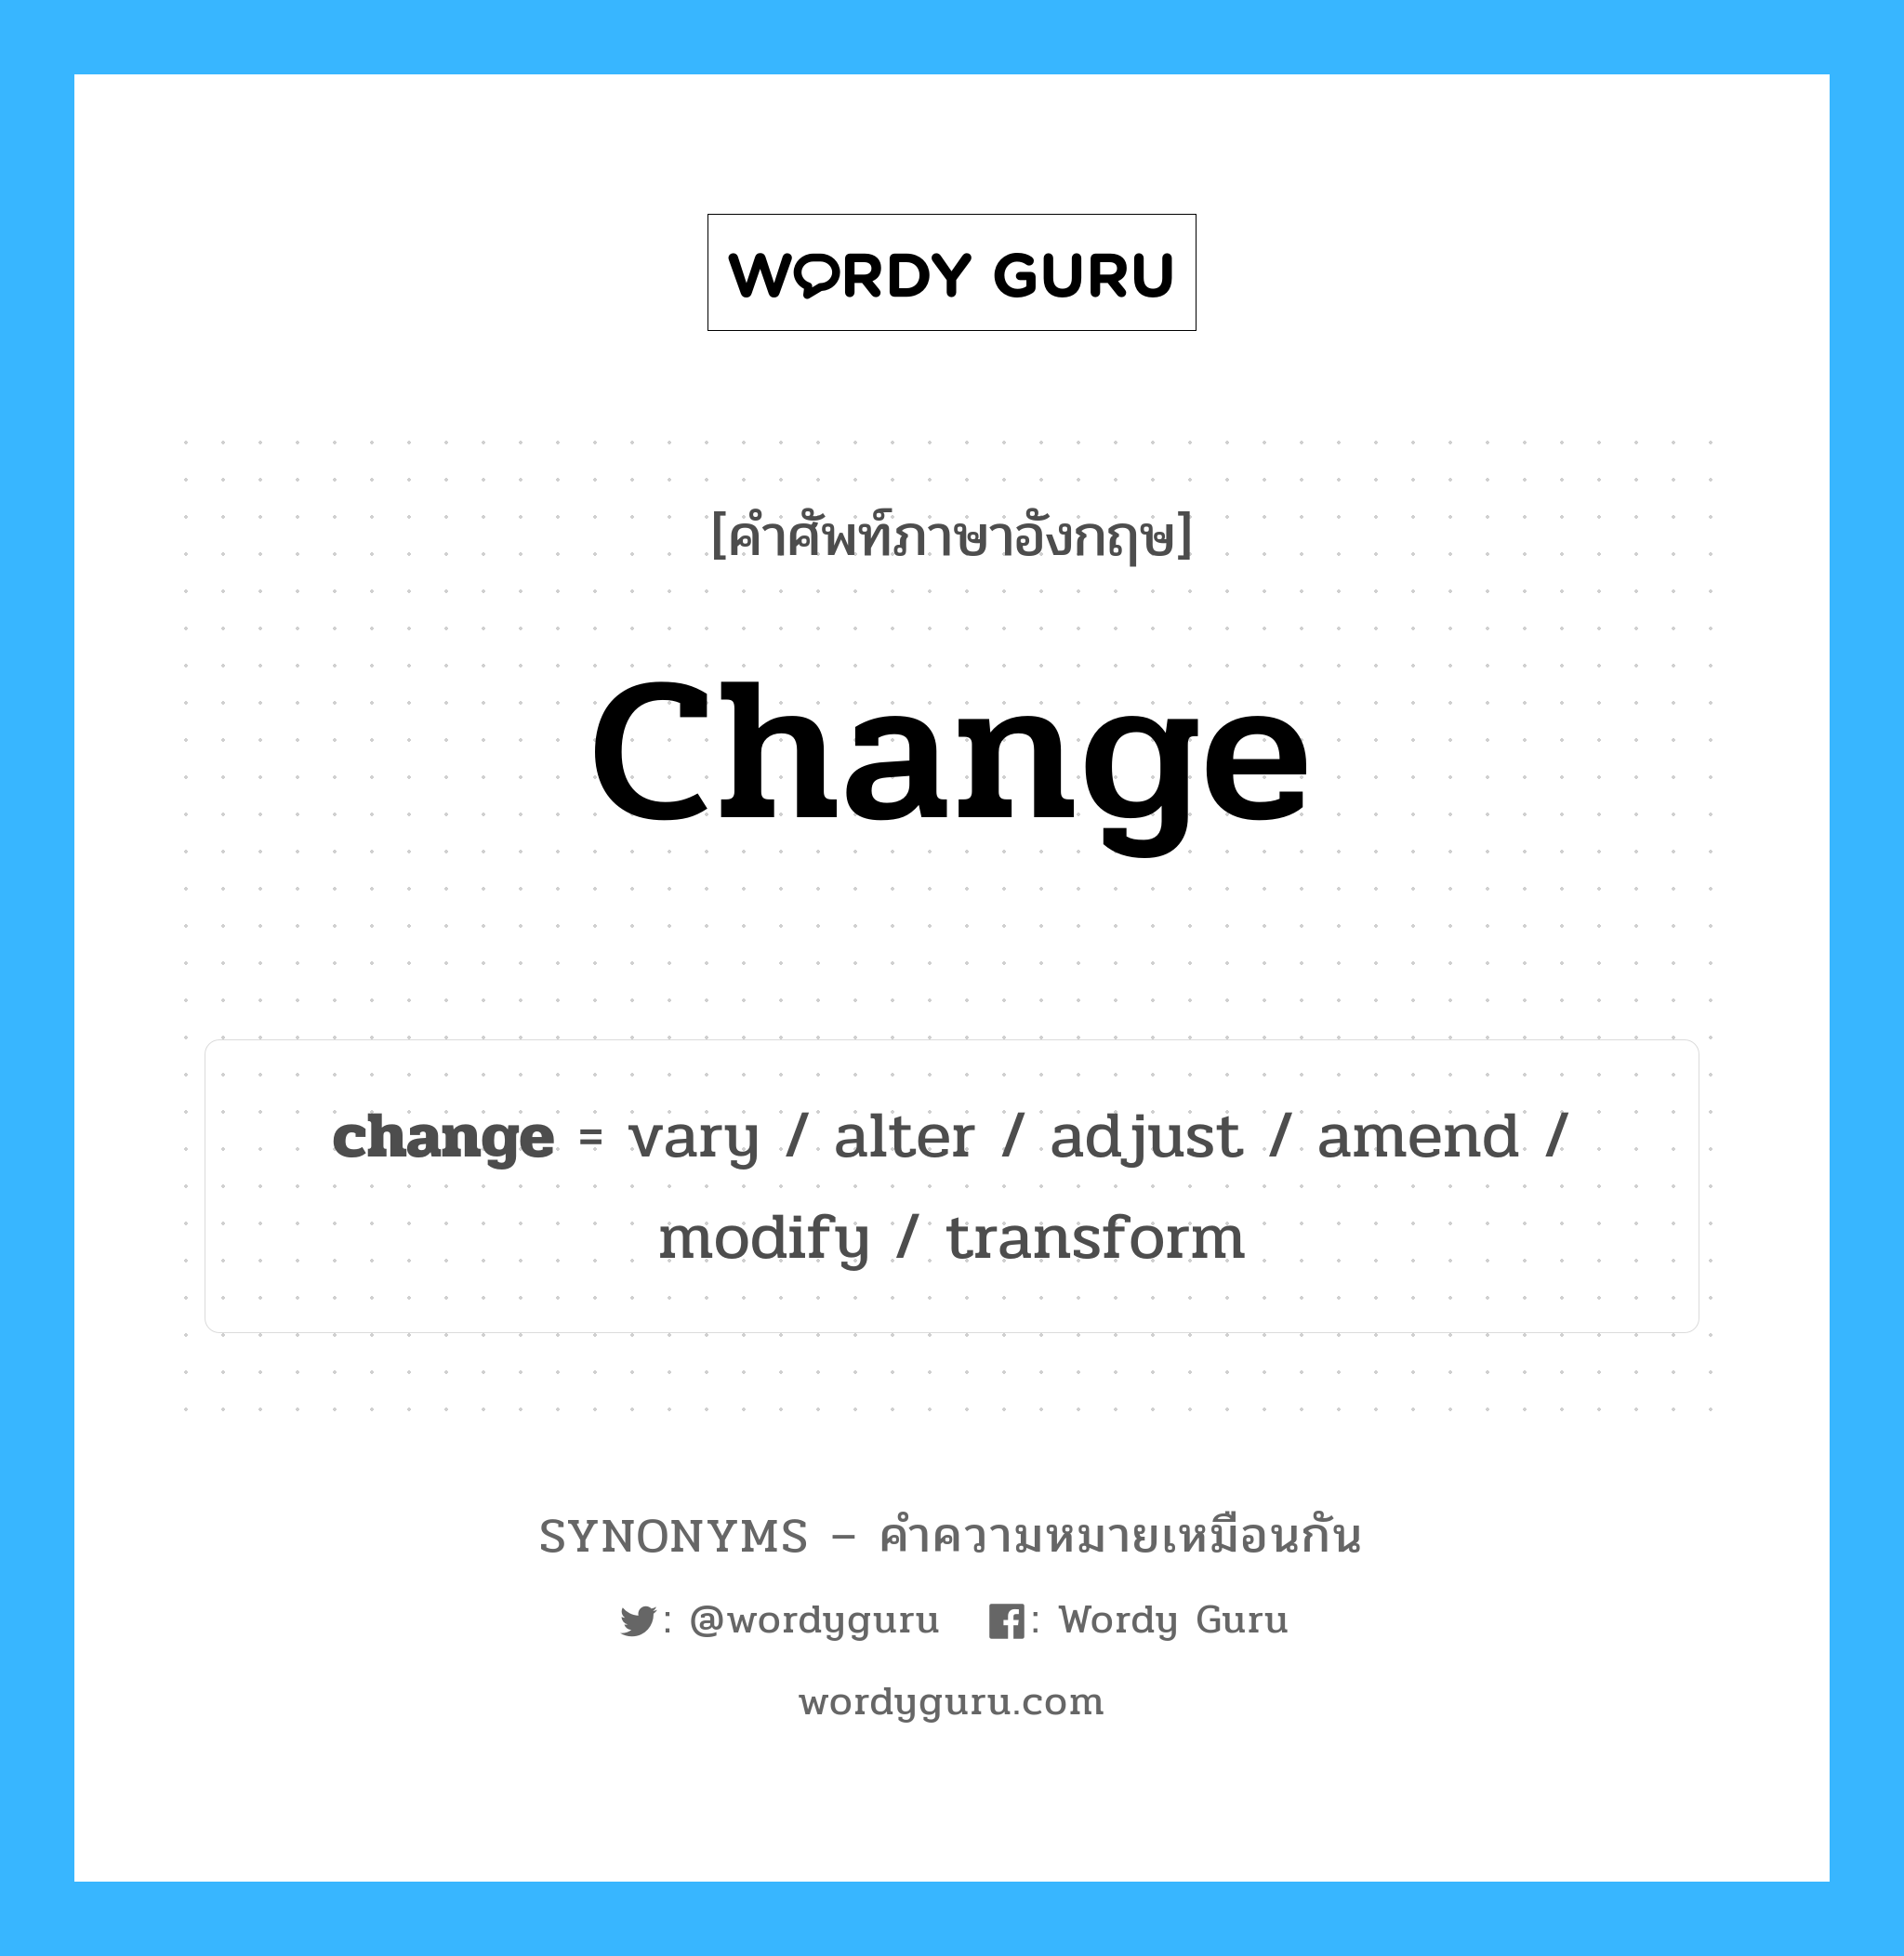 alter เป็นหนึ่งใน change และมีคำอื่น ๆ อีกดังนี้, คำศัพท์ภาษาอังกฤษ alter ความหมายคล้ายกันกับ change แปลว่า เปลี่ยนแปลง หมวด change